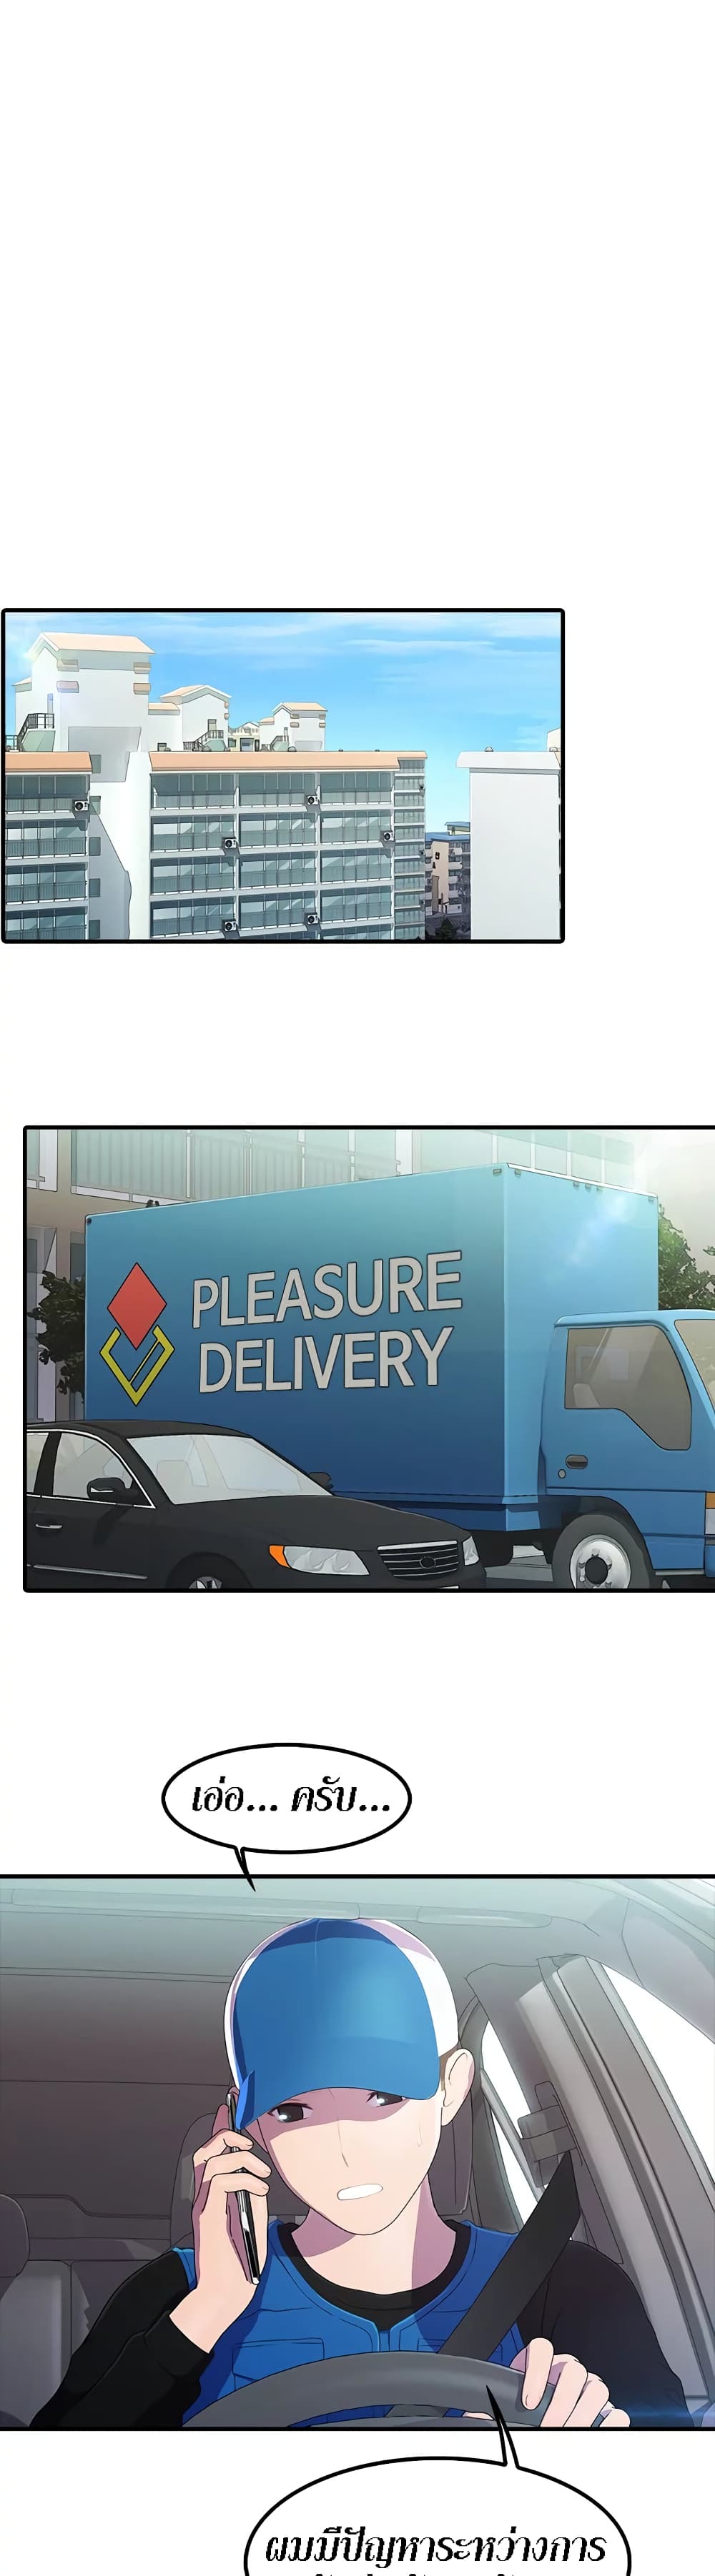 Pleasure Delivery 2-2